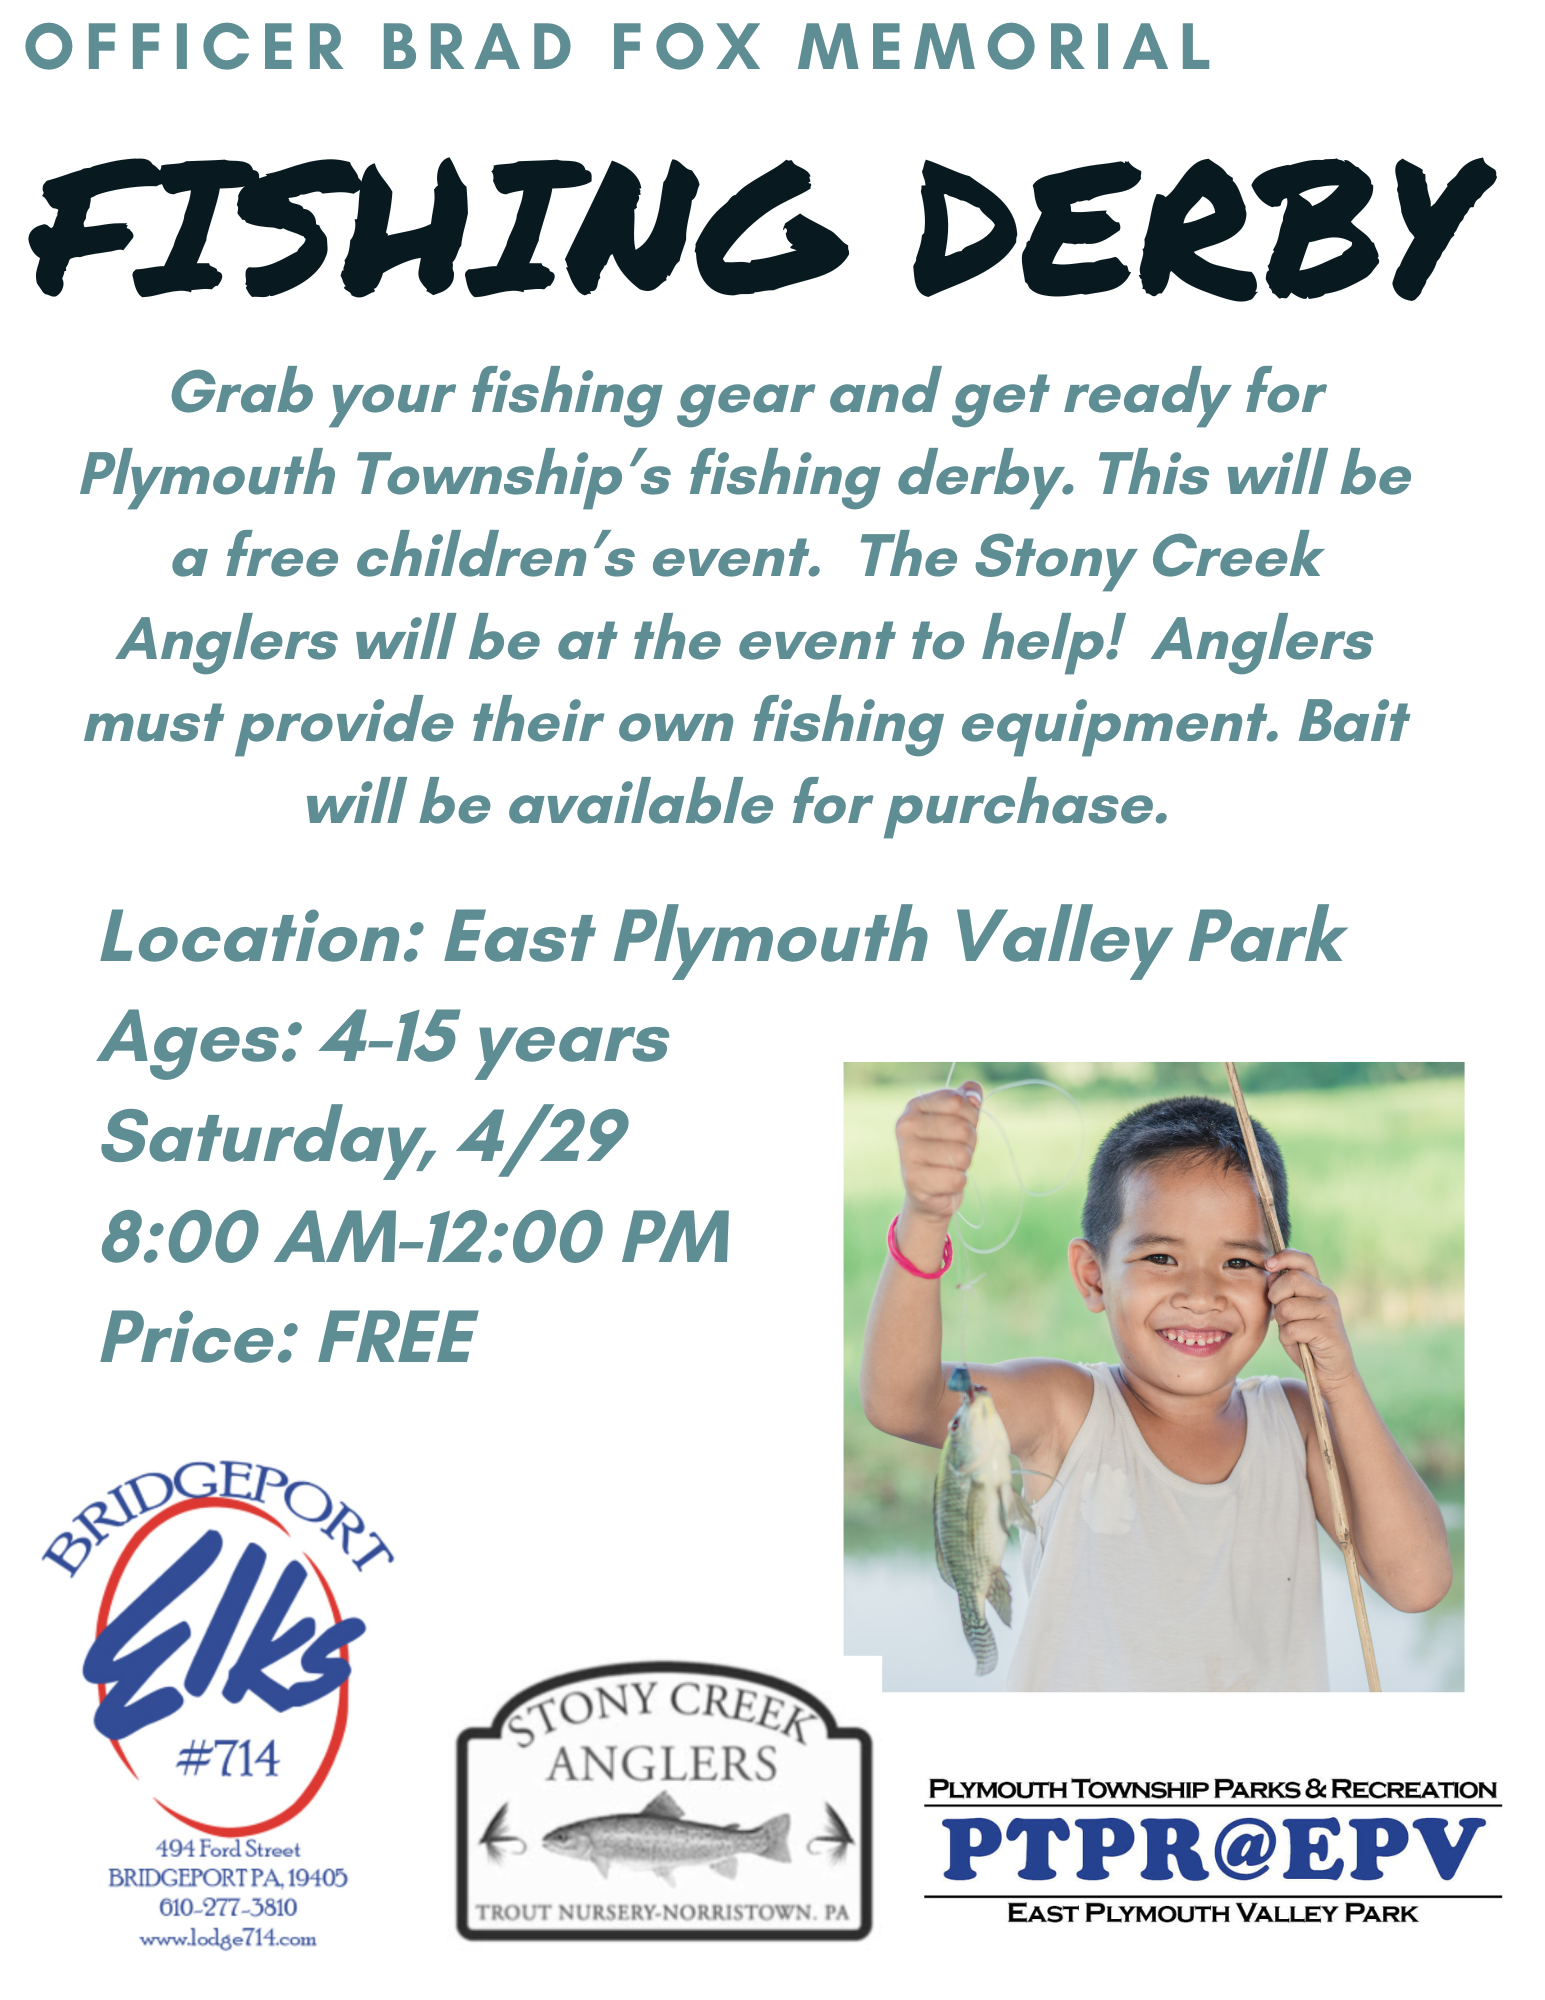 Brad Fox Memorial Fishing Derby @ East Plymouth Valley Park Pond